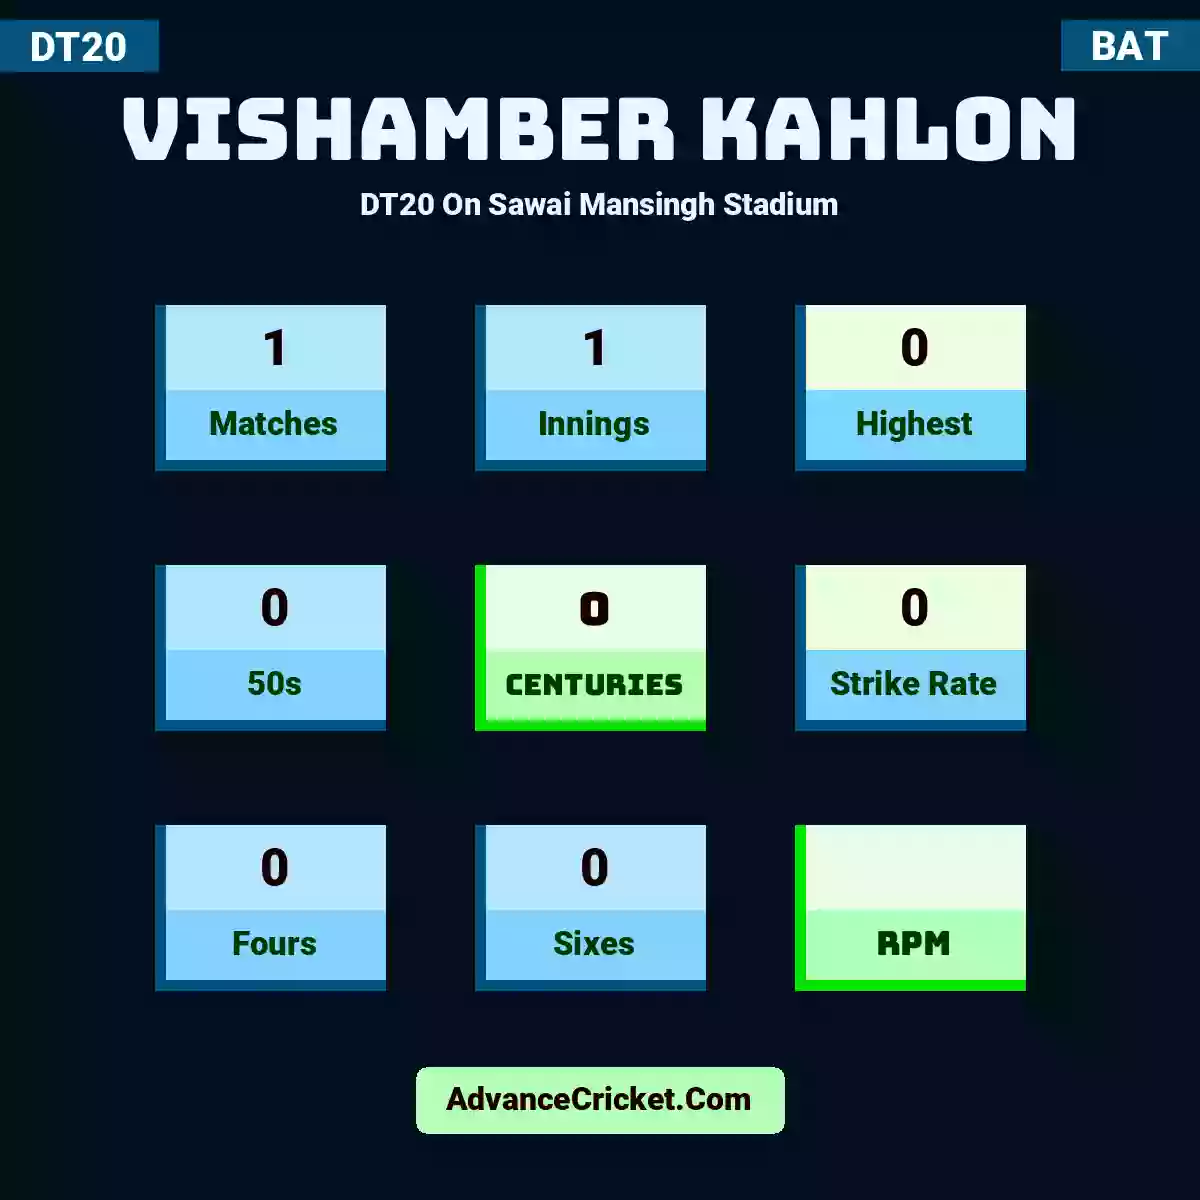 Vishamber Kahlon DT20  On Sawai Mansingh Stadium, Vishamber Kahlon played 1 matches, scored 0 runs as highest, 0 half-centuries, and 0 centuries, with a strike rate of 0. V.Kahlon hit 0 fours and 0 sixes.